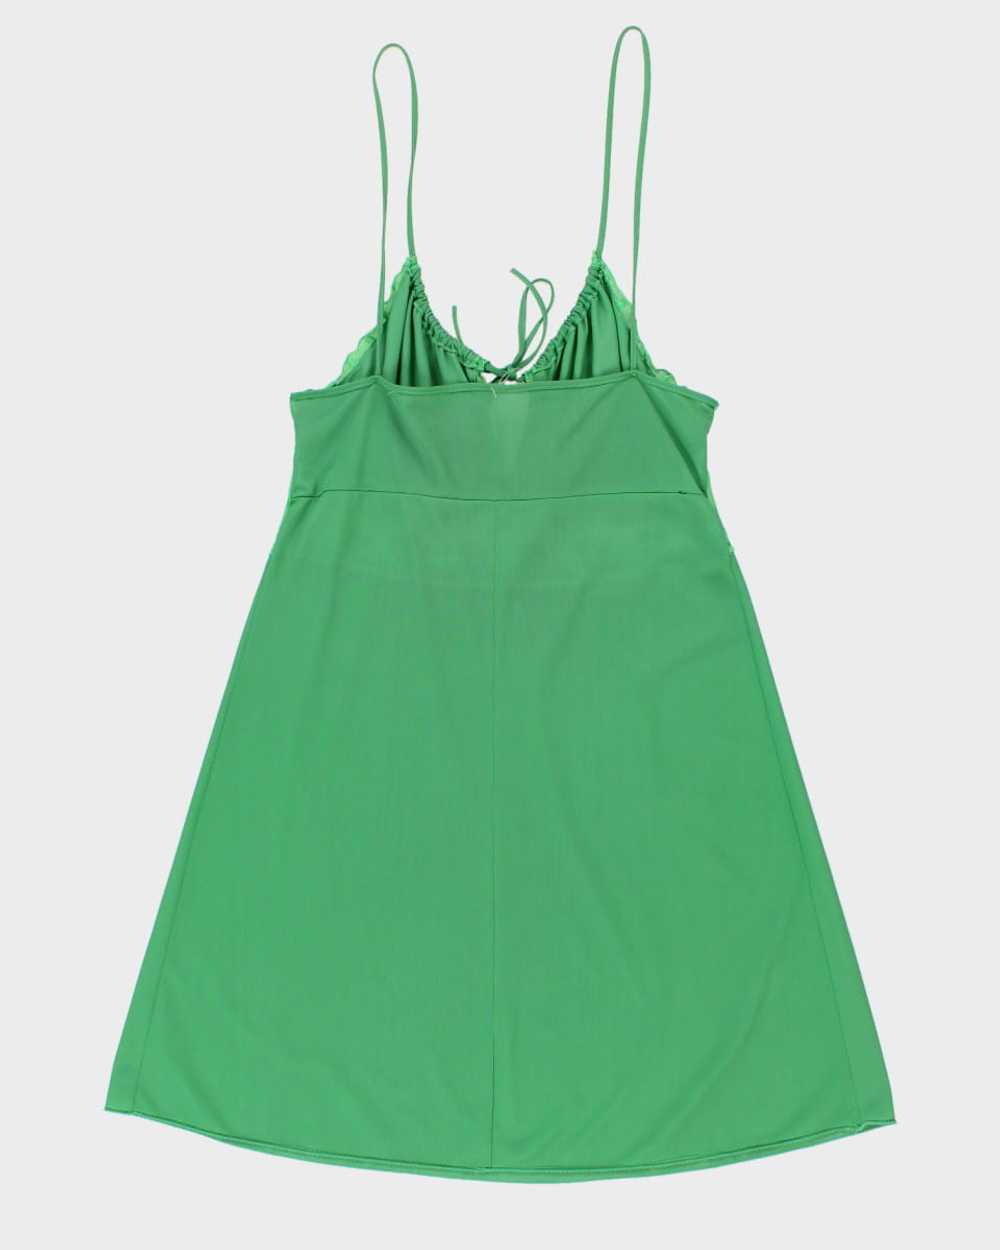 Vintage Darling Embroidered Green Slip Dress - XS - image 2